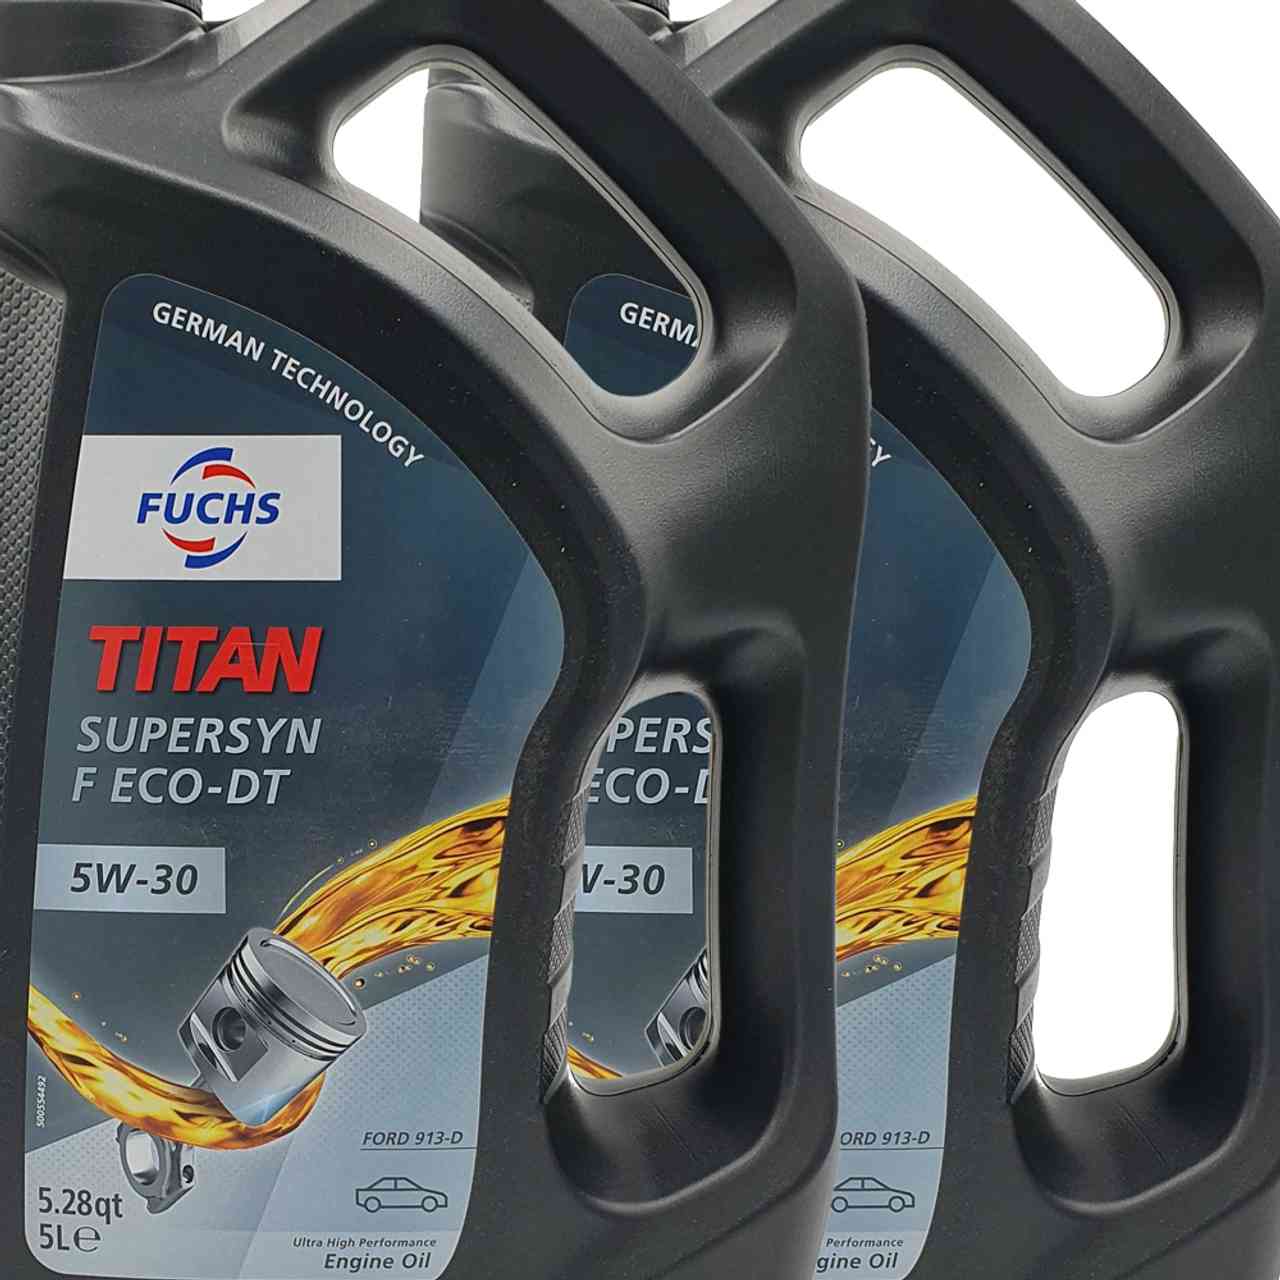 Fuchs Titan Supersyn F ECO-DT 5W-30 2x5 Liter